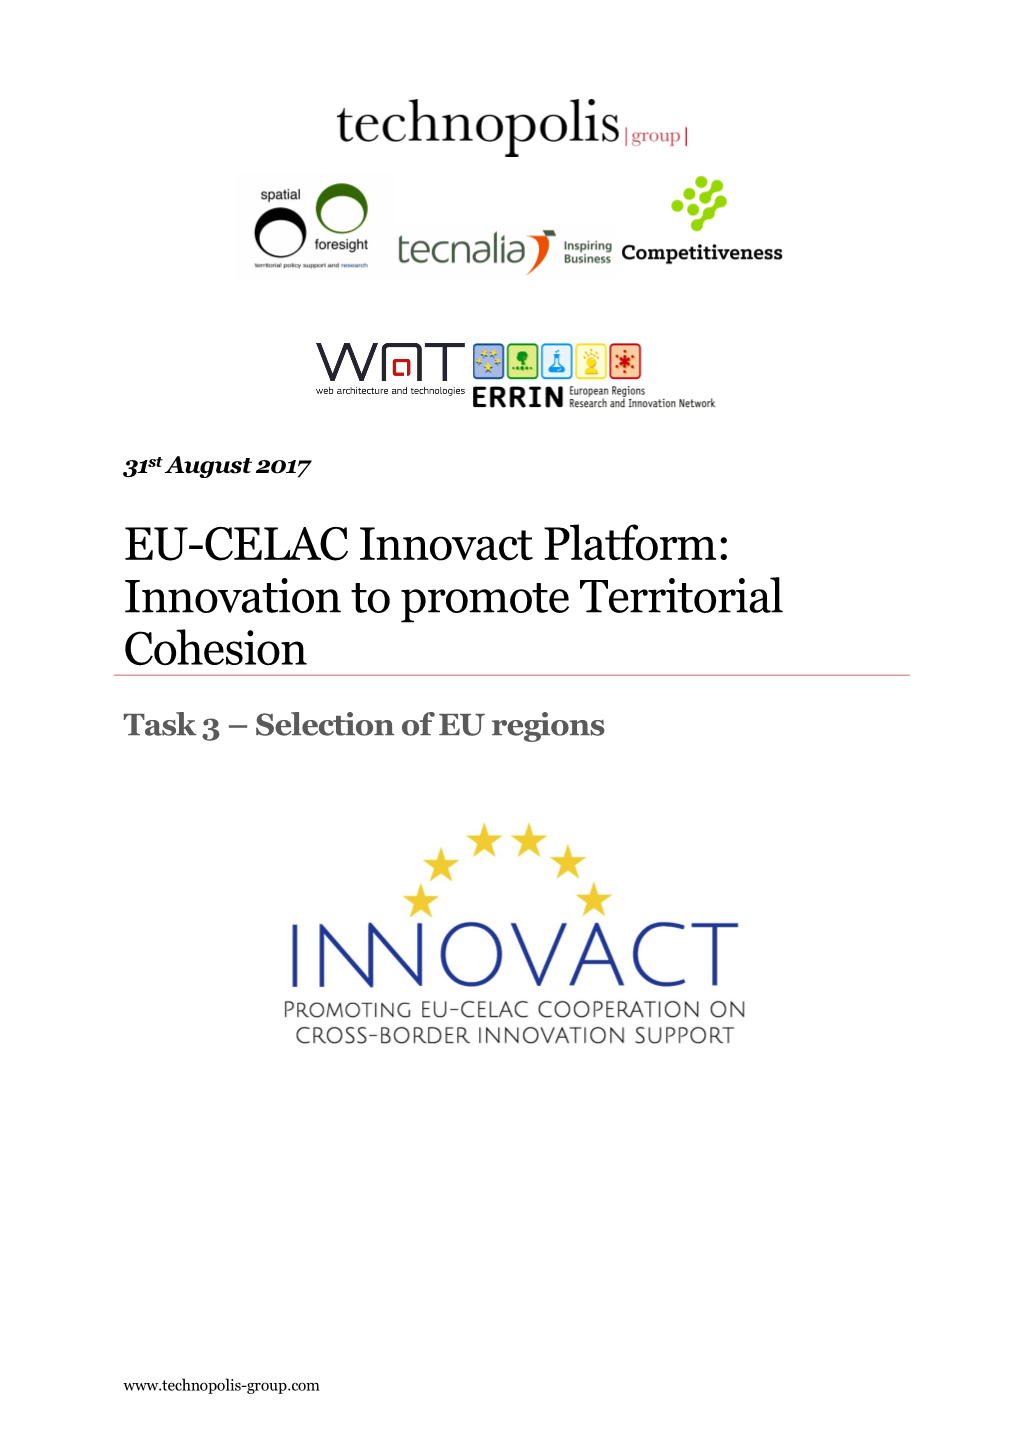 EU-CELAC Innovact Platform: Innovation to Promote Territorial Cohesion 2